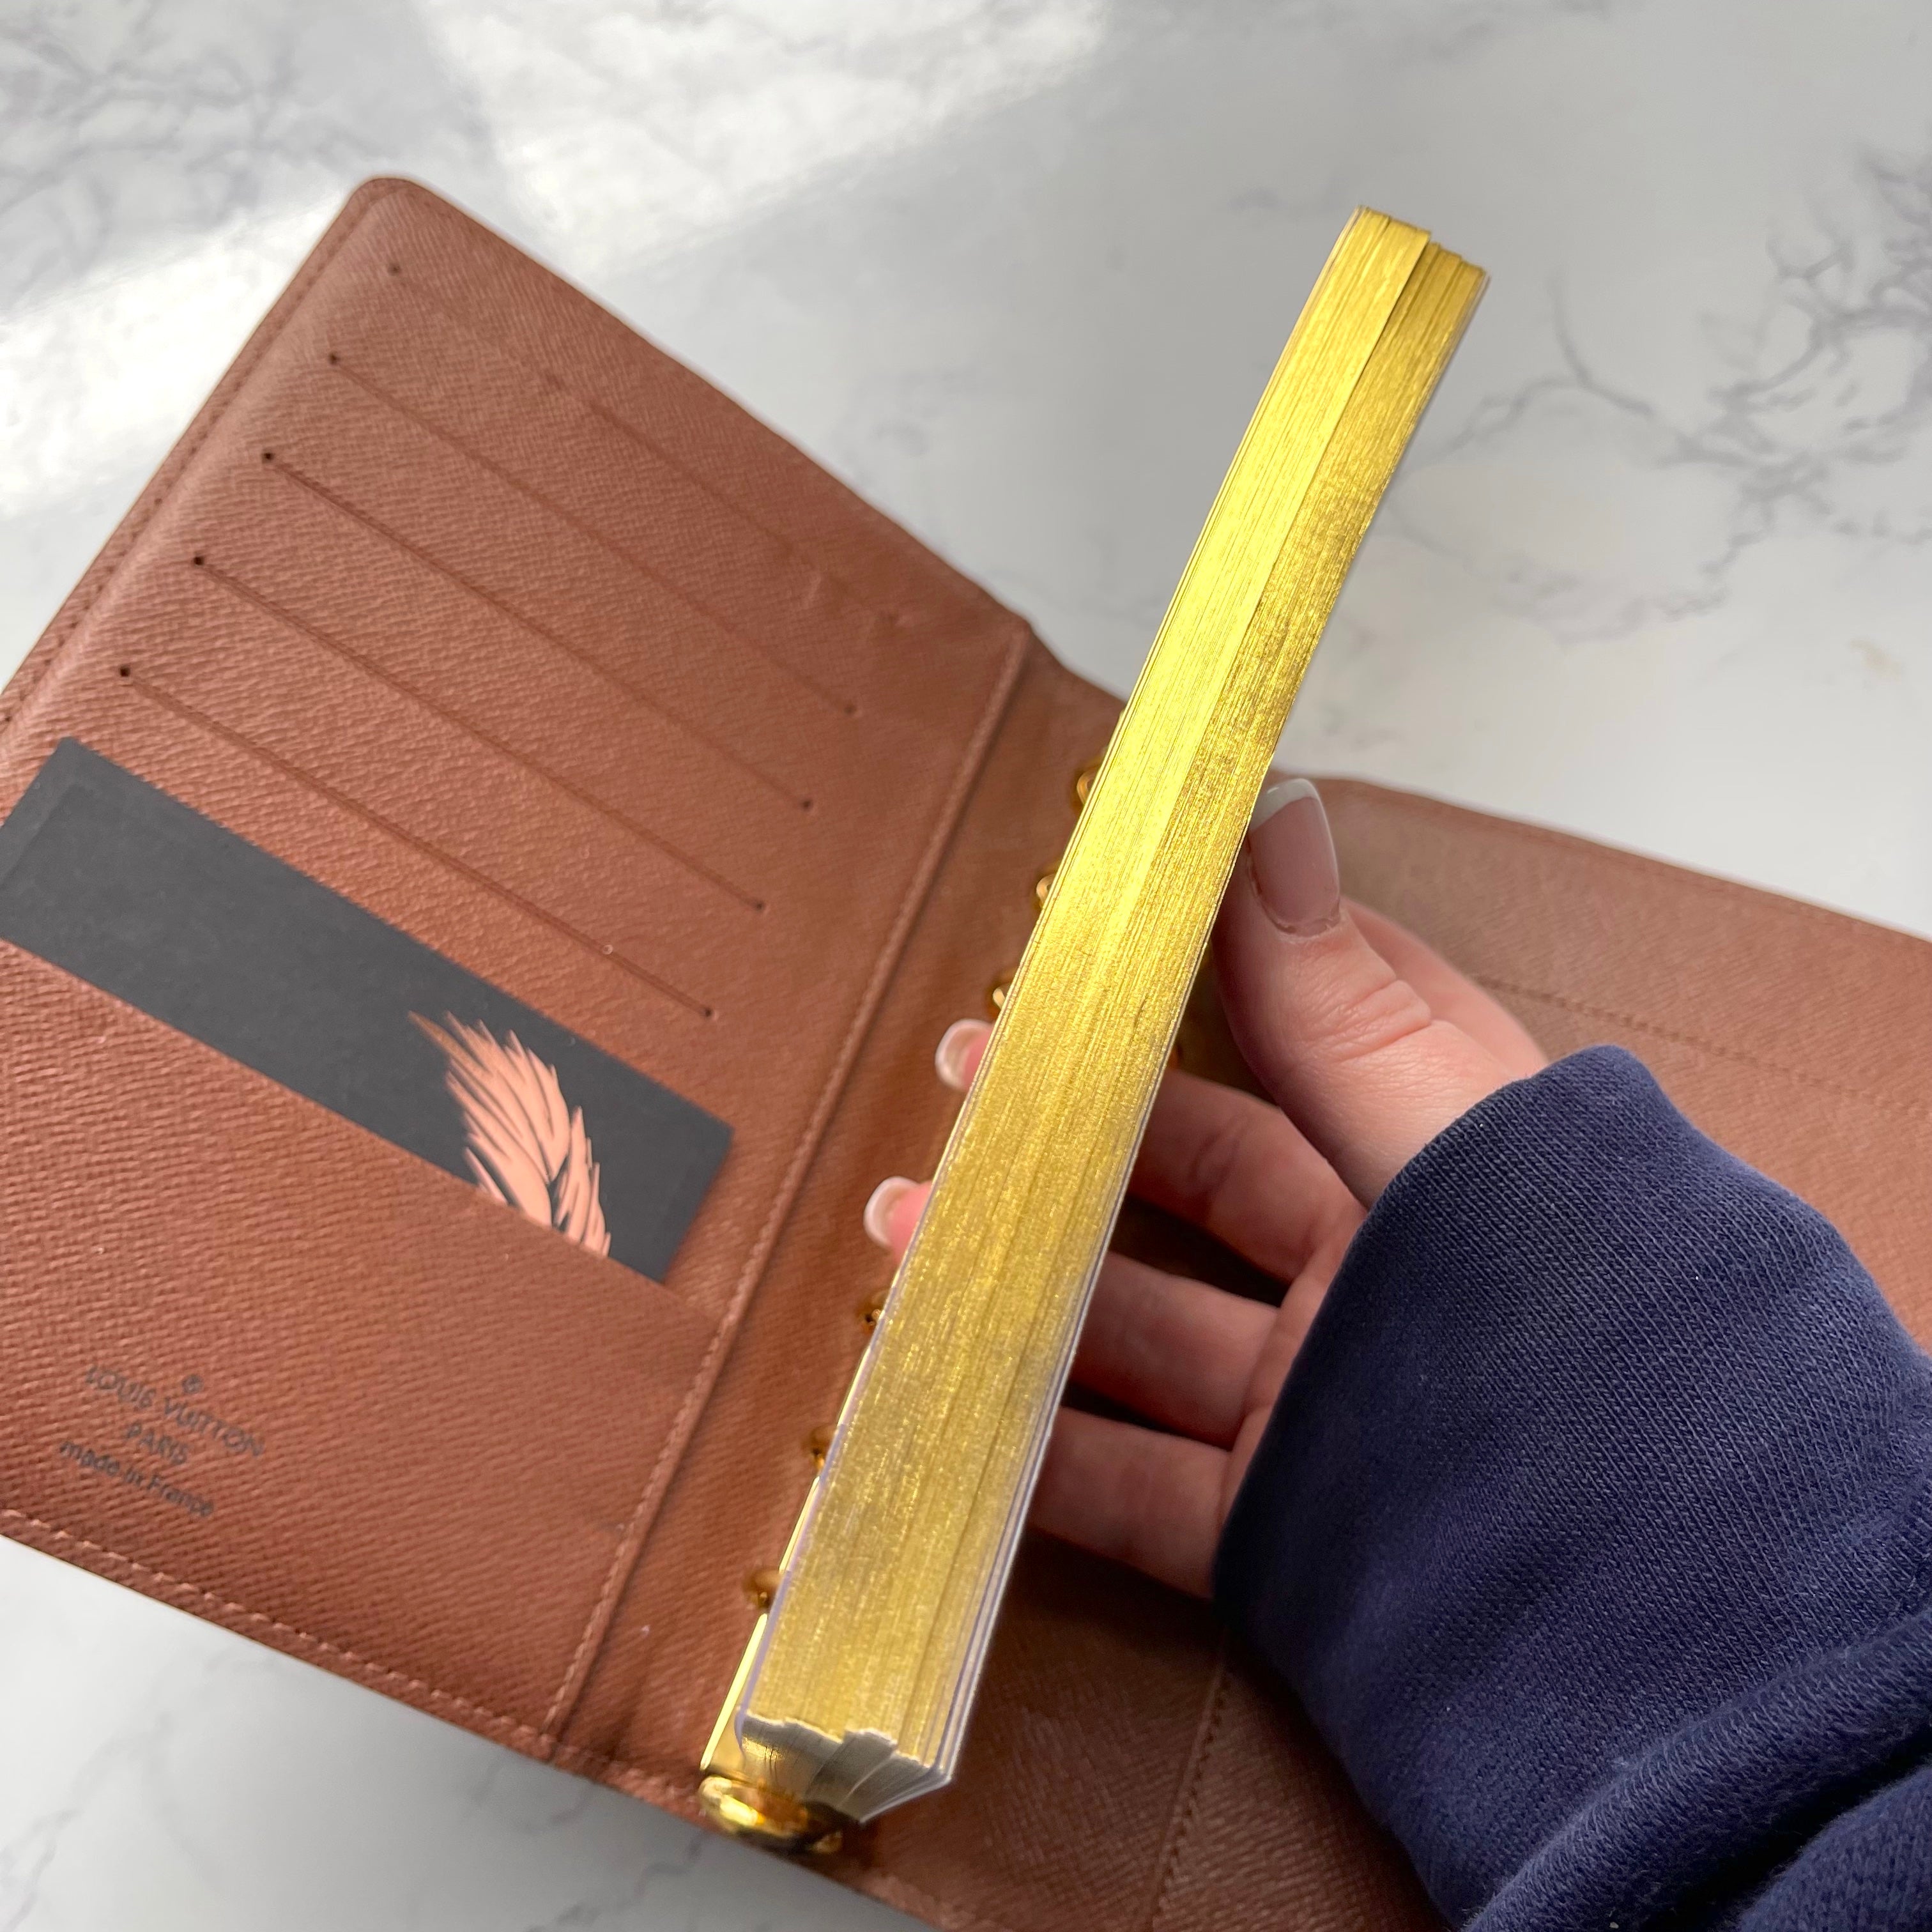 Vtg Rare Louis Vuitton Monogram Leather Cover Notebook Agenda Daily Planner